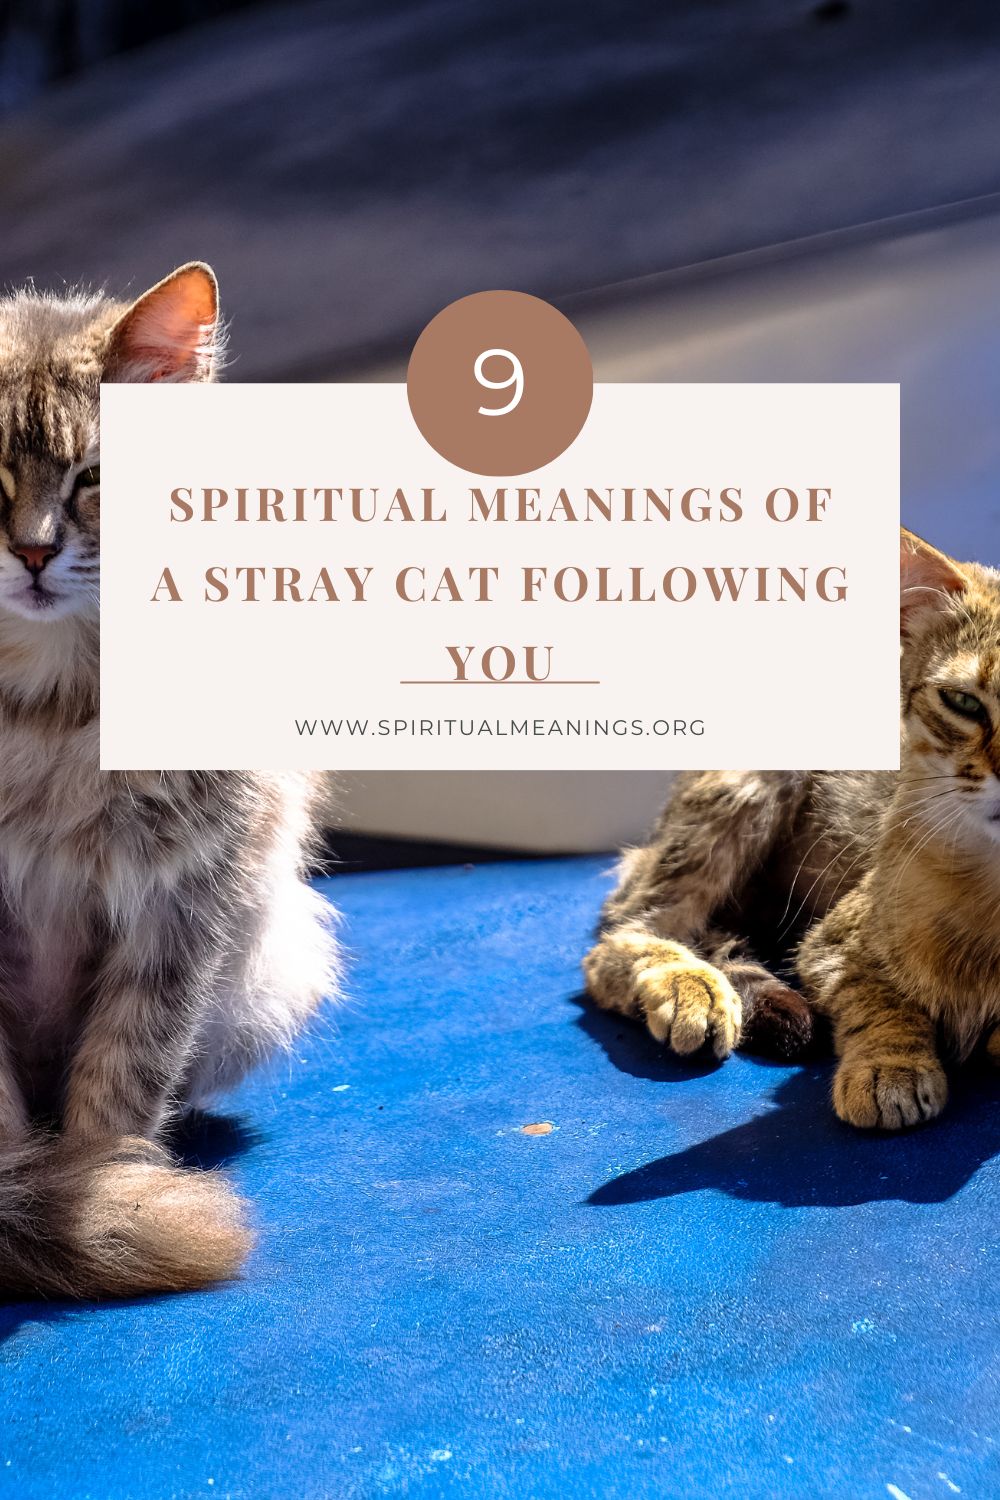 Spiritual interpretation of the cat following you